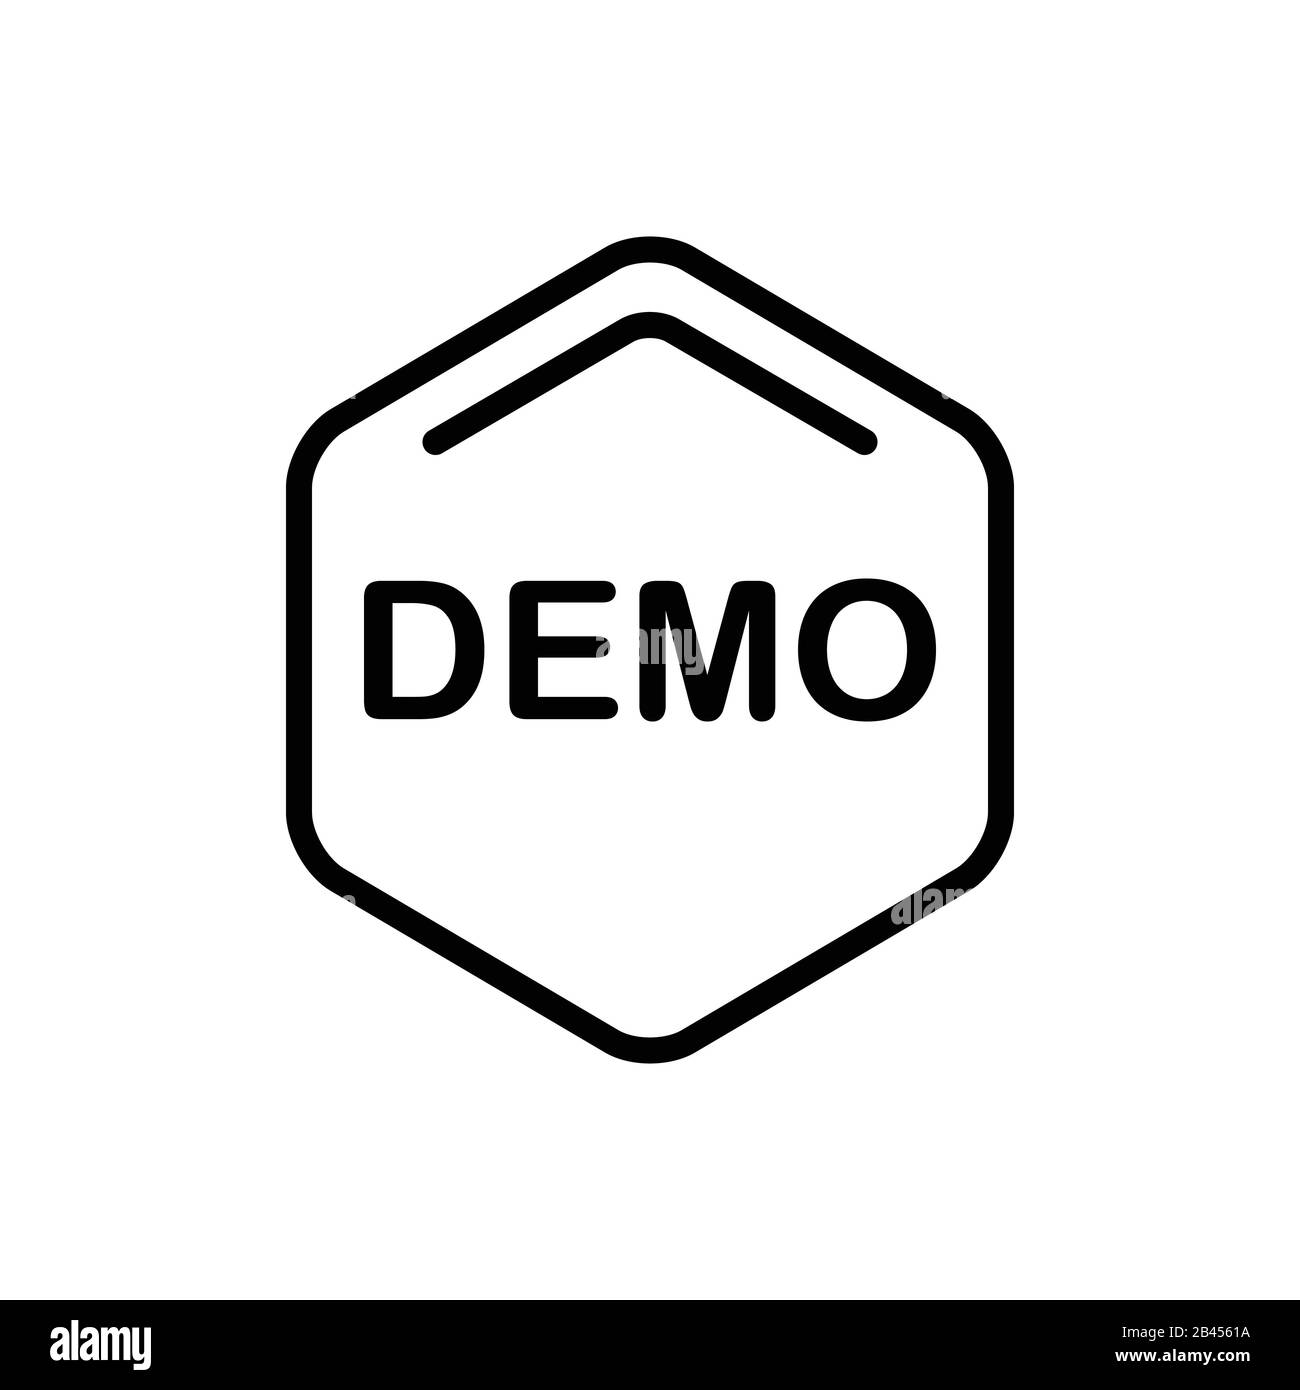 Demo icon Black and White Stock Photos & Images - Alamy